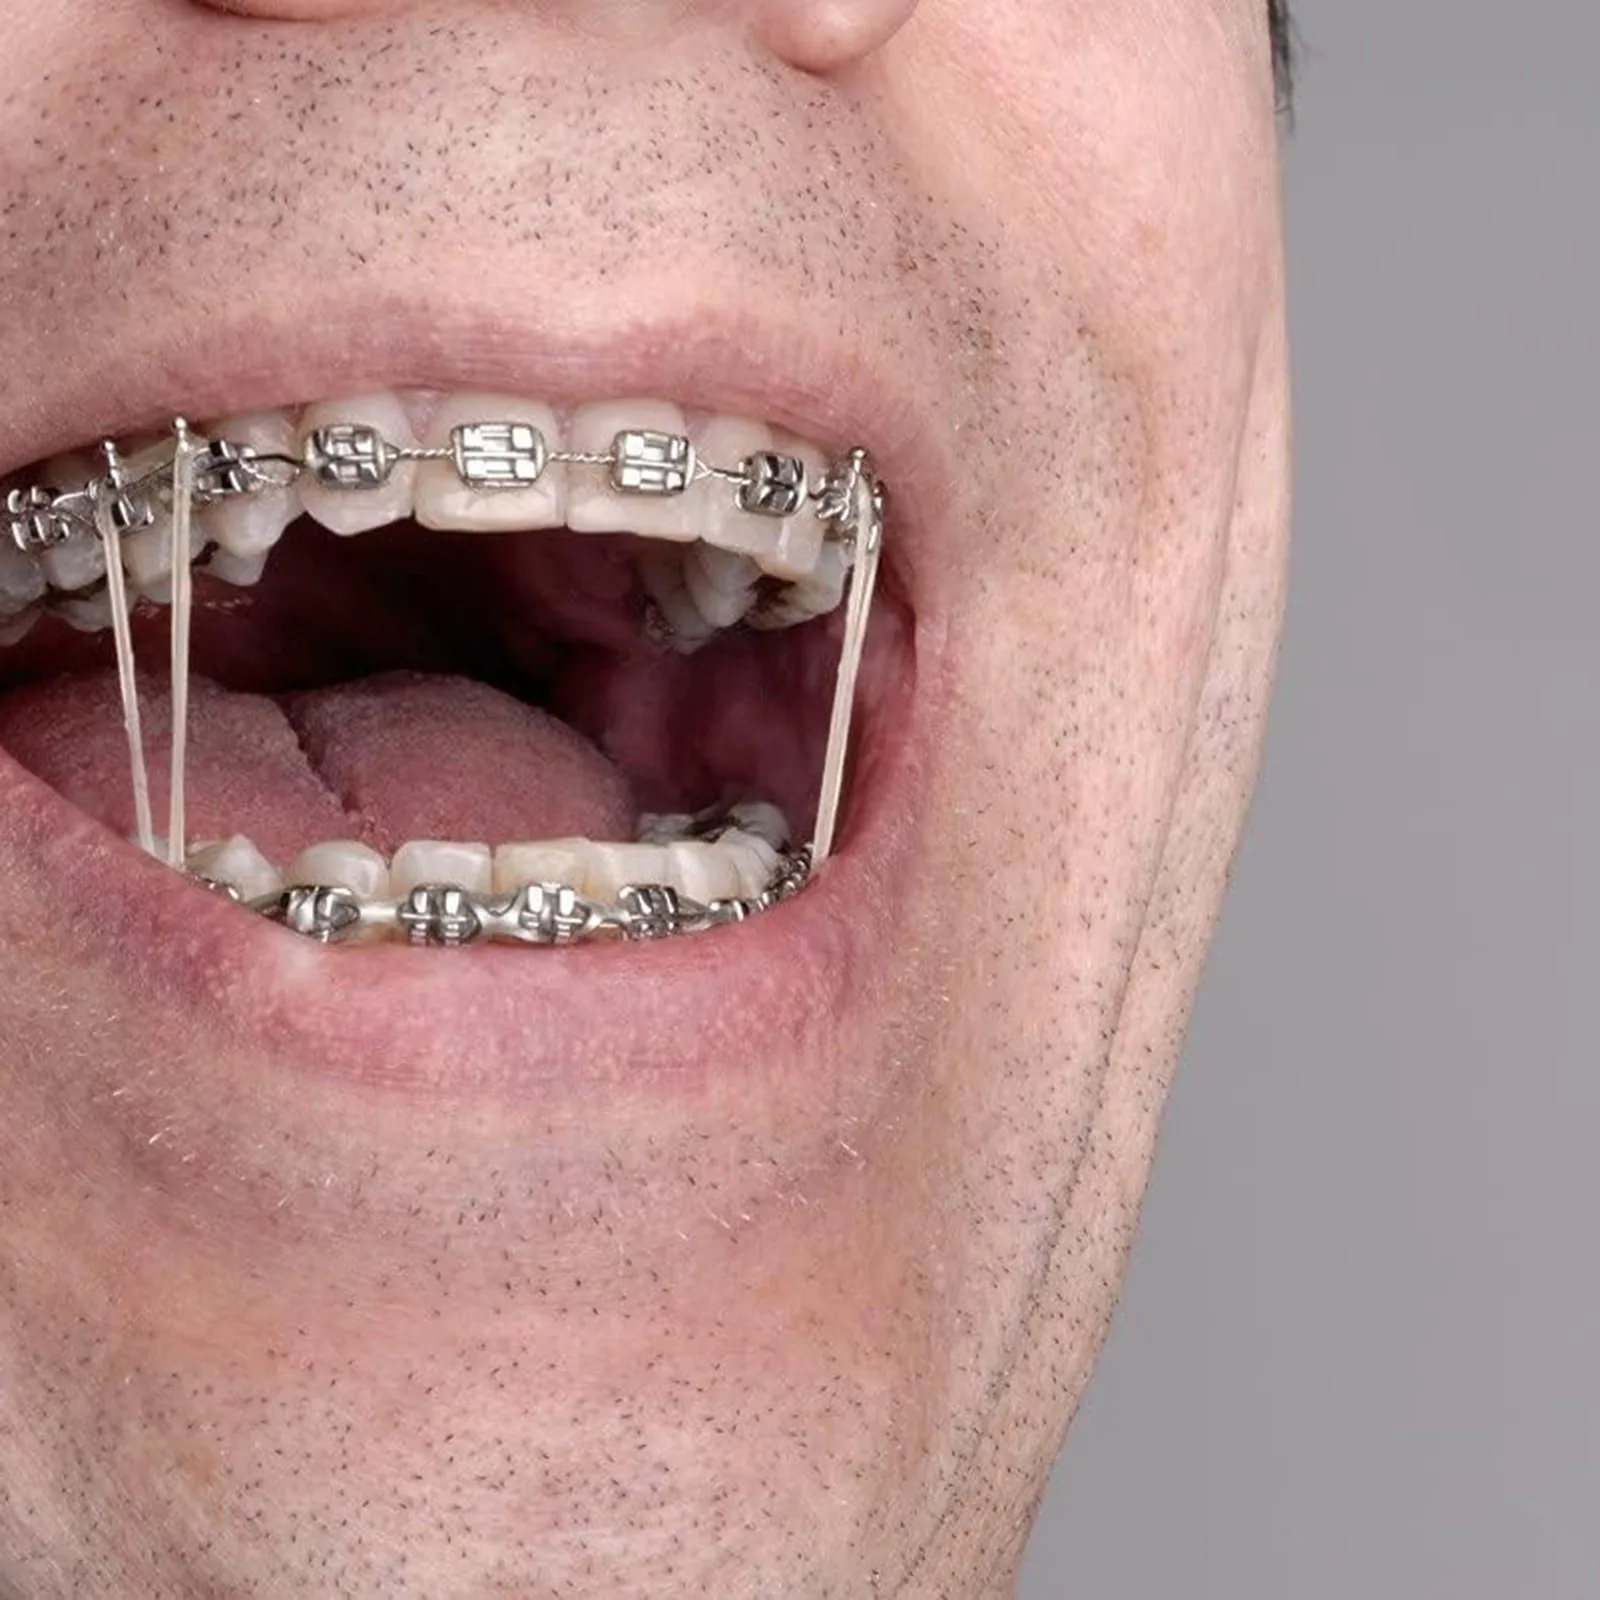 100 Pcs Rubber Bands For Teeth Care Teeth Elastics Braces Teeth Correcting Deformity 3.5 Oz 3/8